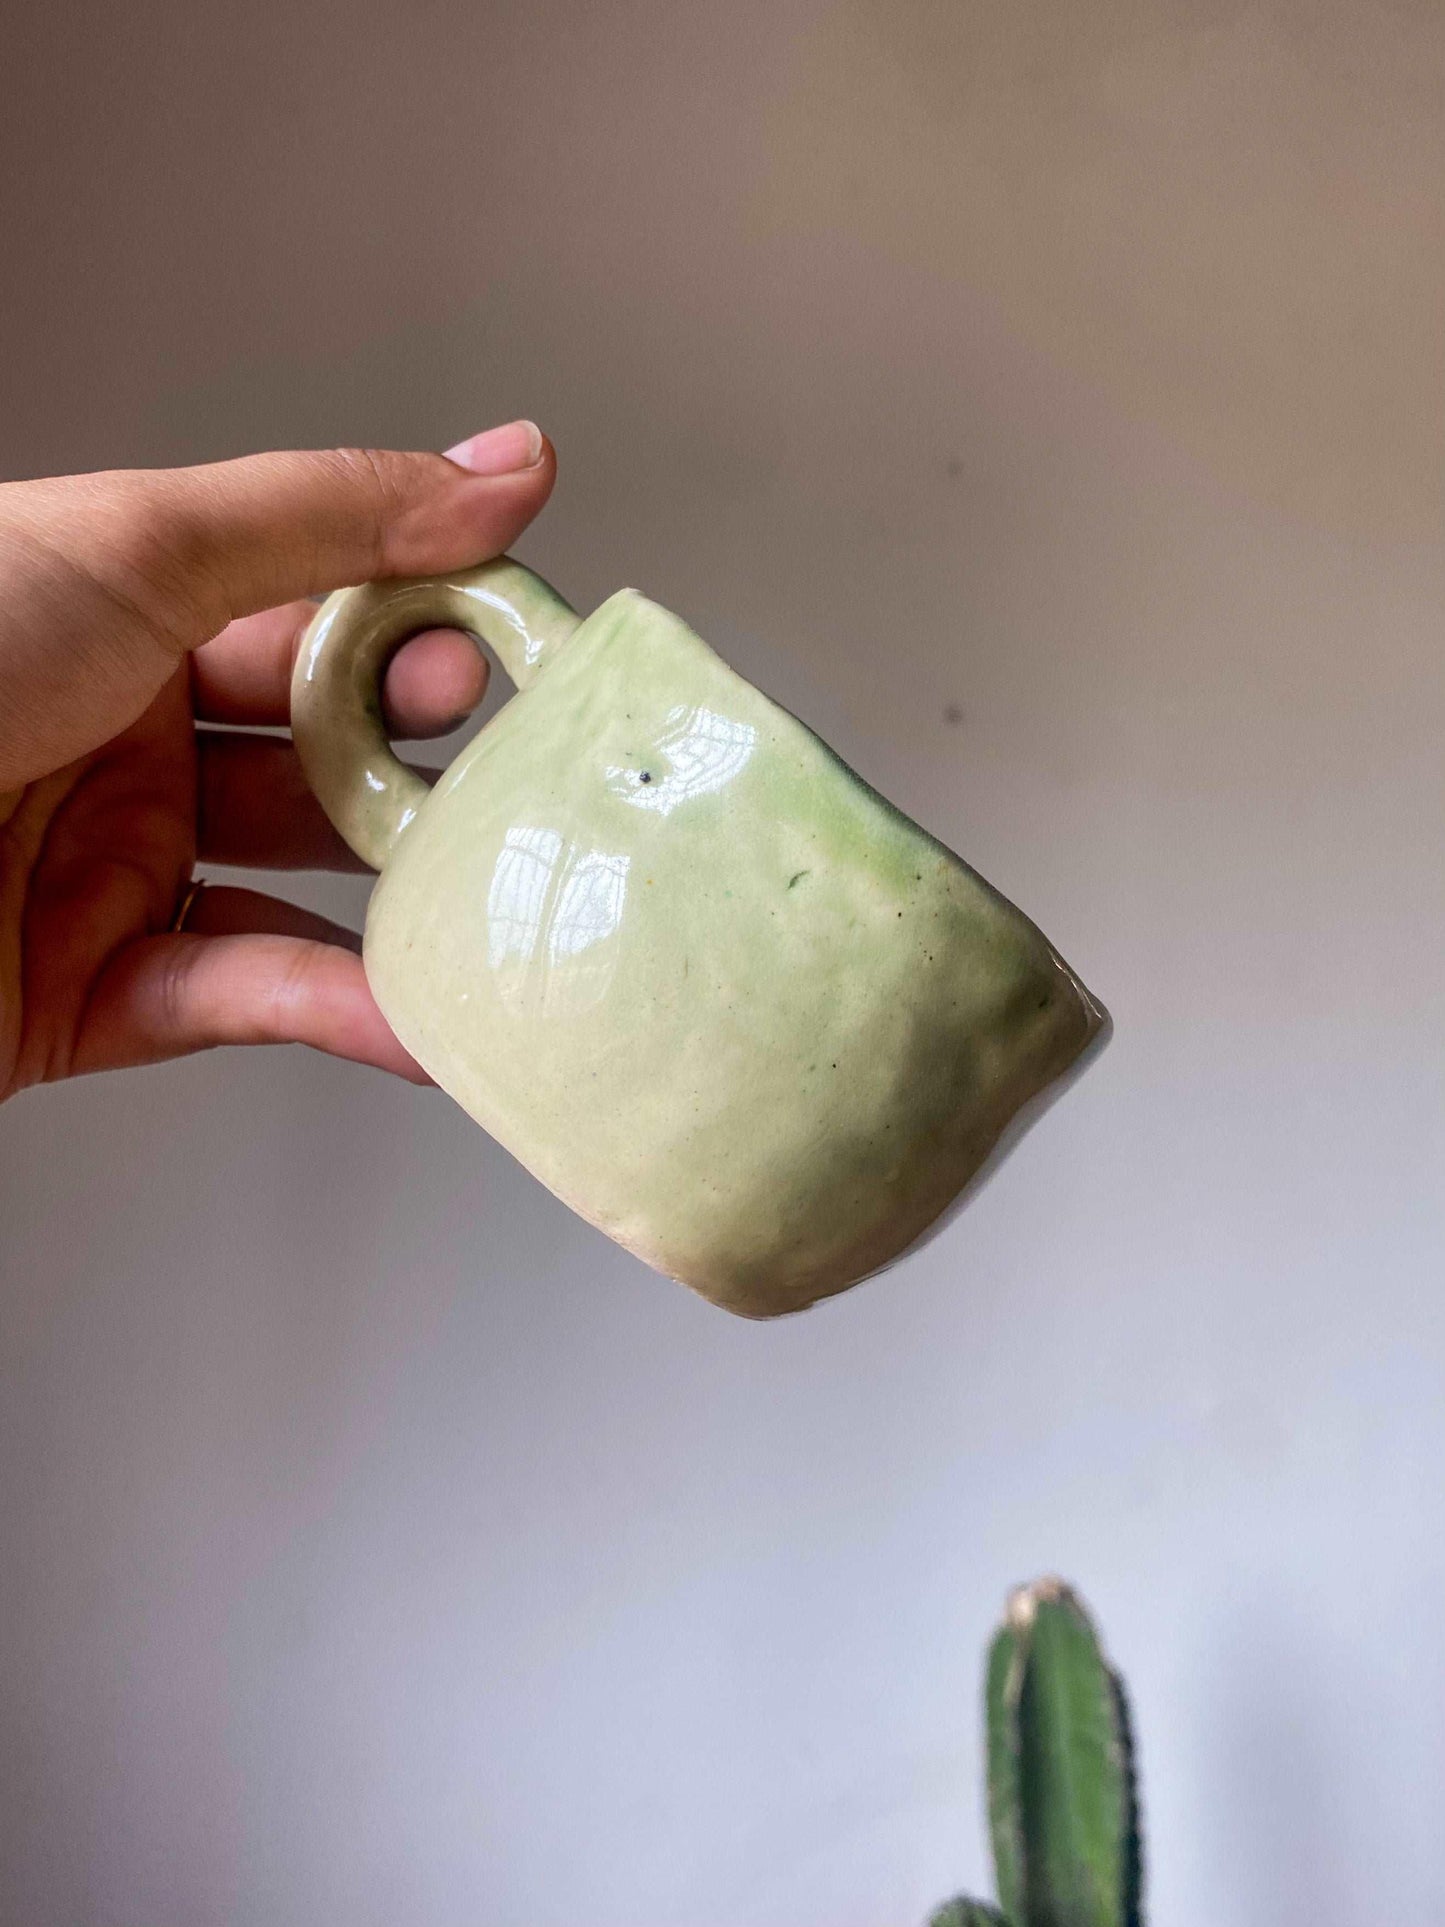 Olive Green Hand Pinched Ceramic Coffee , Tea Mug